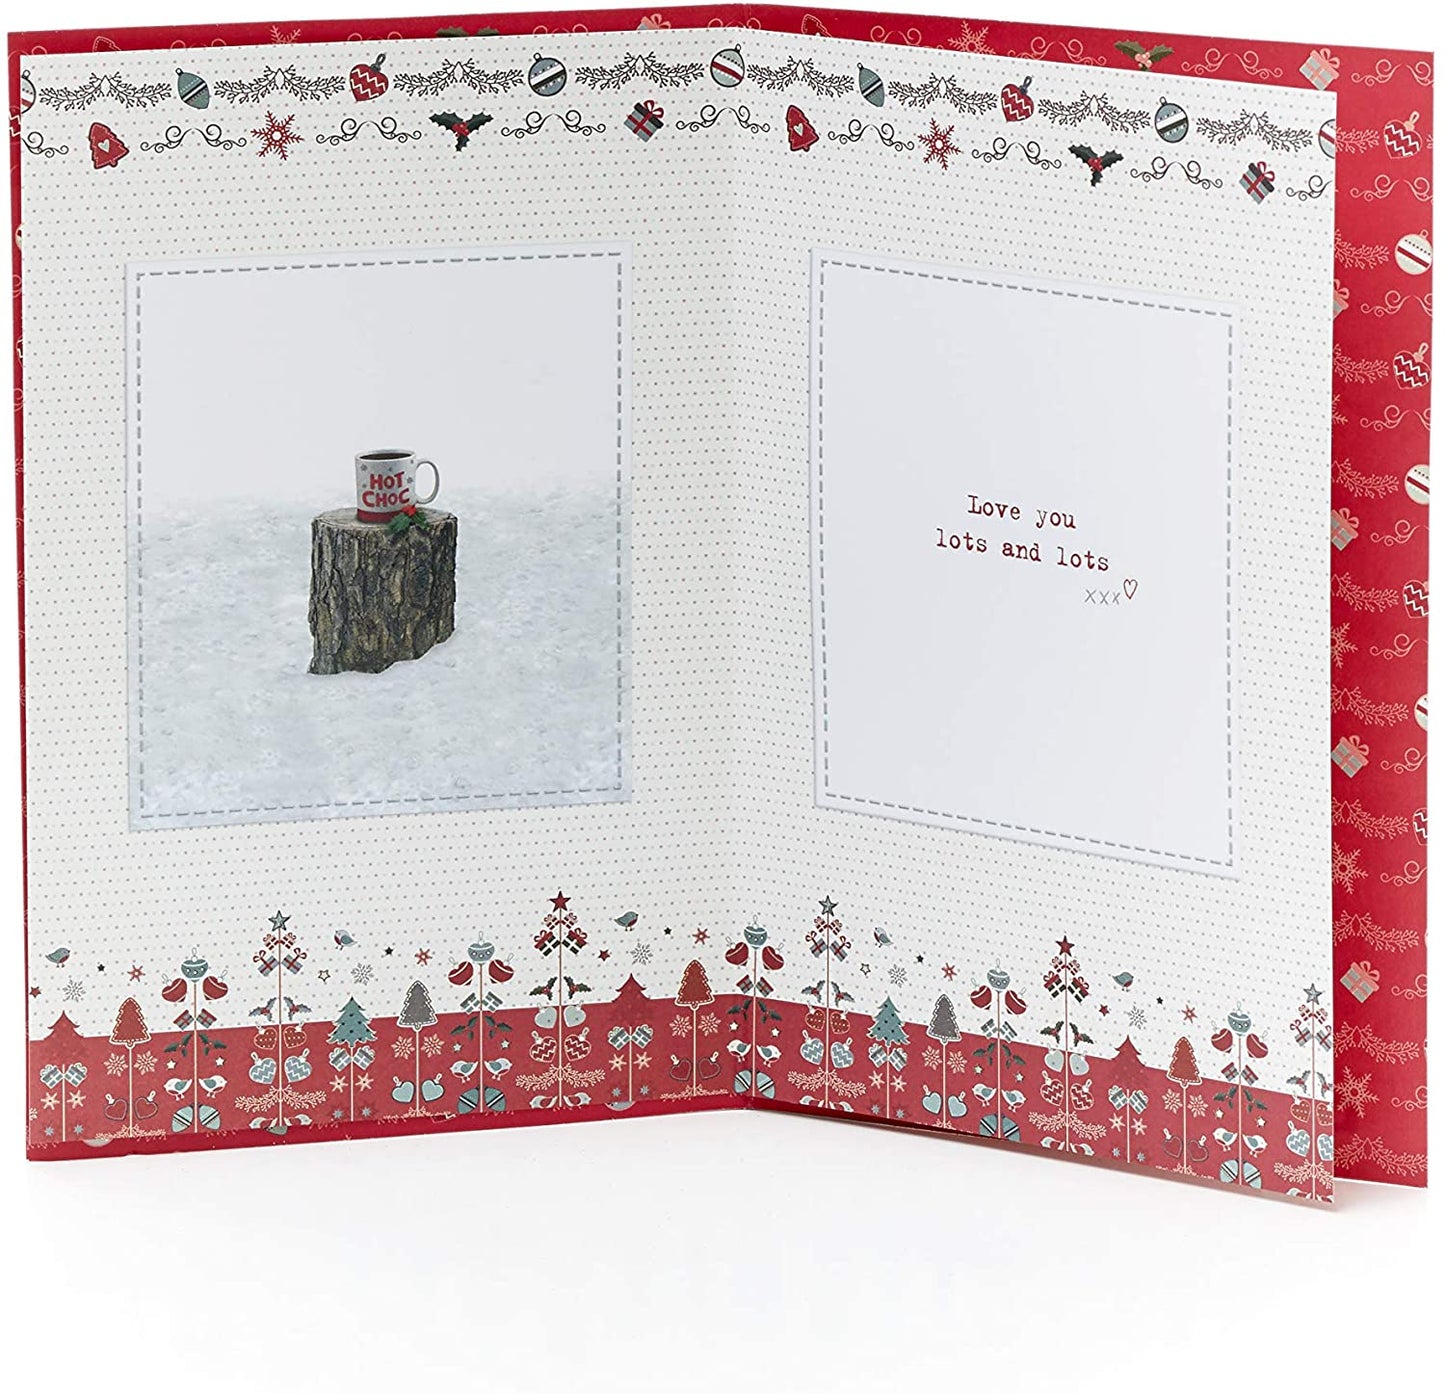 Boofles Holding Hot Choc Mug Design Grandad Christmas Card 